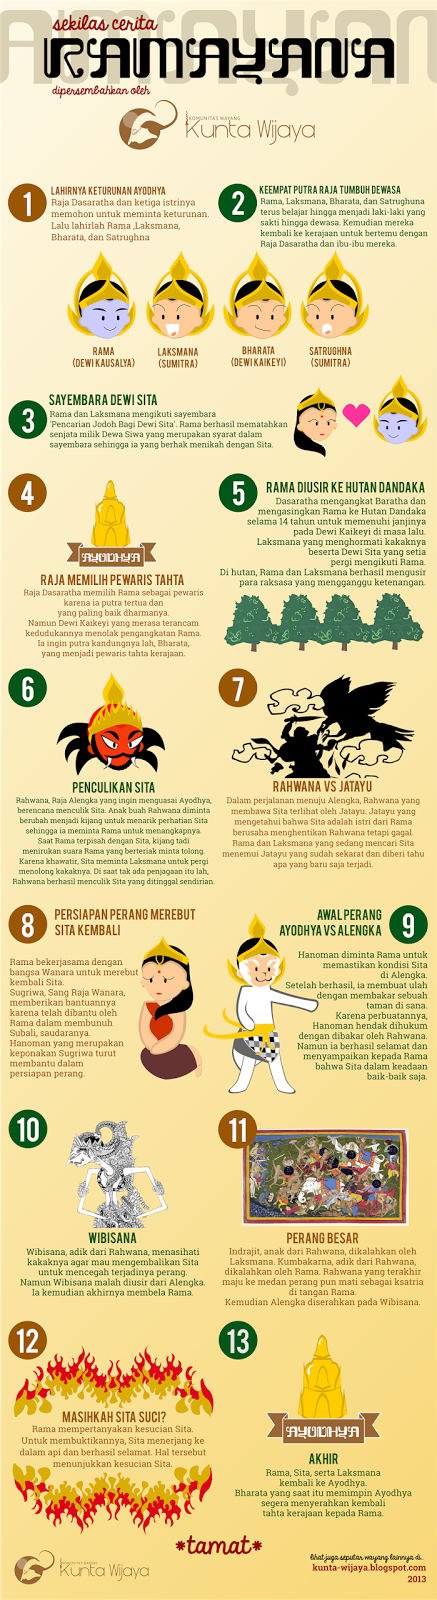 Komunitas Wayang Kunta Wijaya: Infografik Ramayana